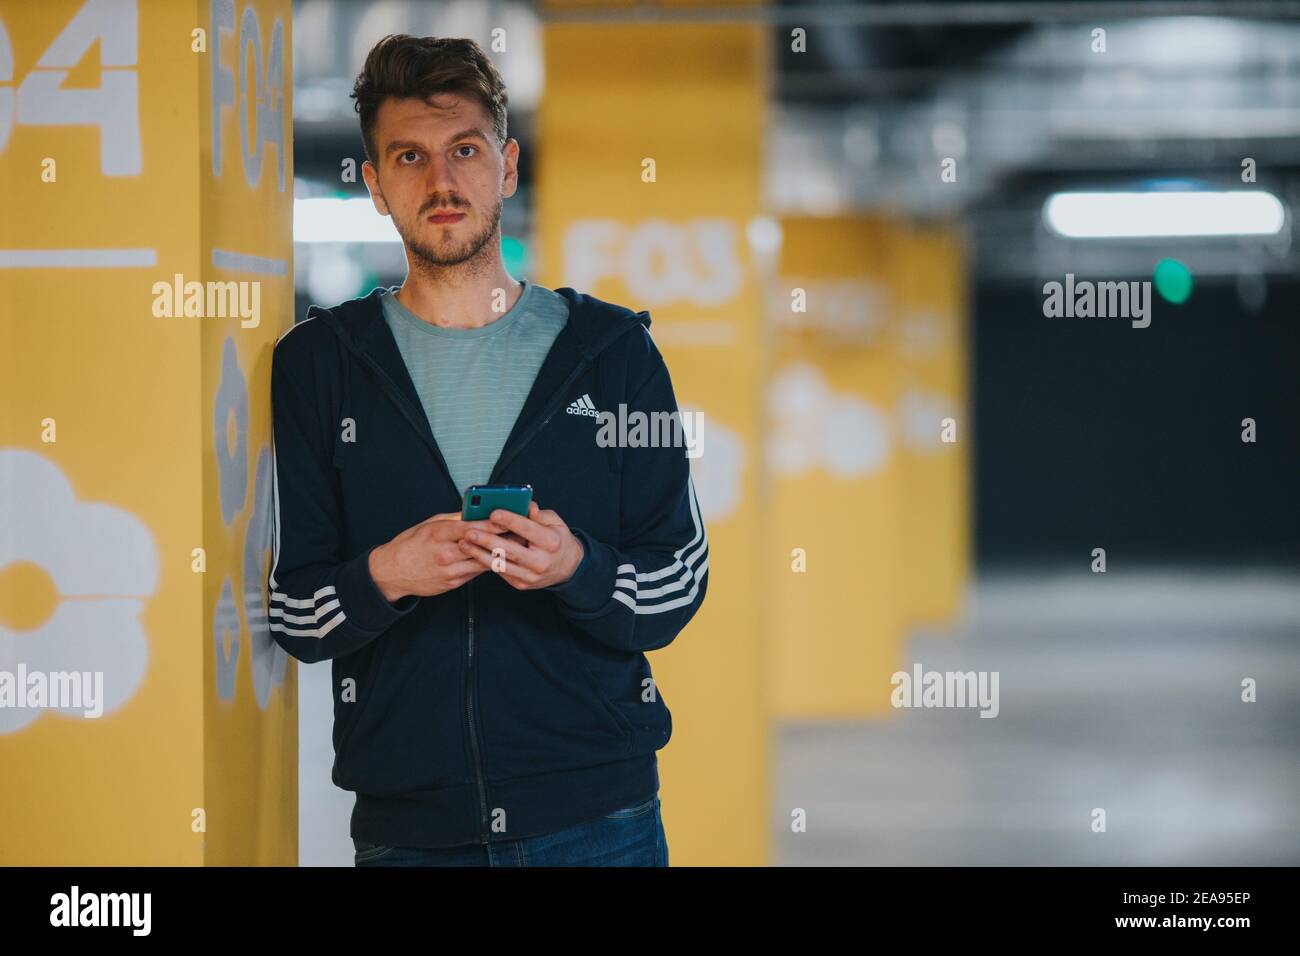 BANJA LUKA, BOSNIEN UND HERZEGOWINA - Nov 27, 2019: Mann trägt Adidas- Trainingsanzug in der Garage hält Telefon Stockfotografie - Alamy